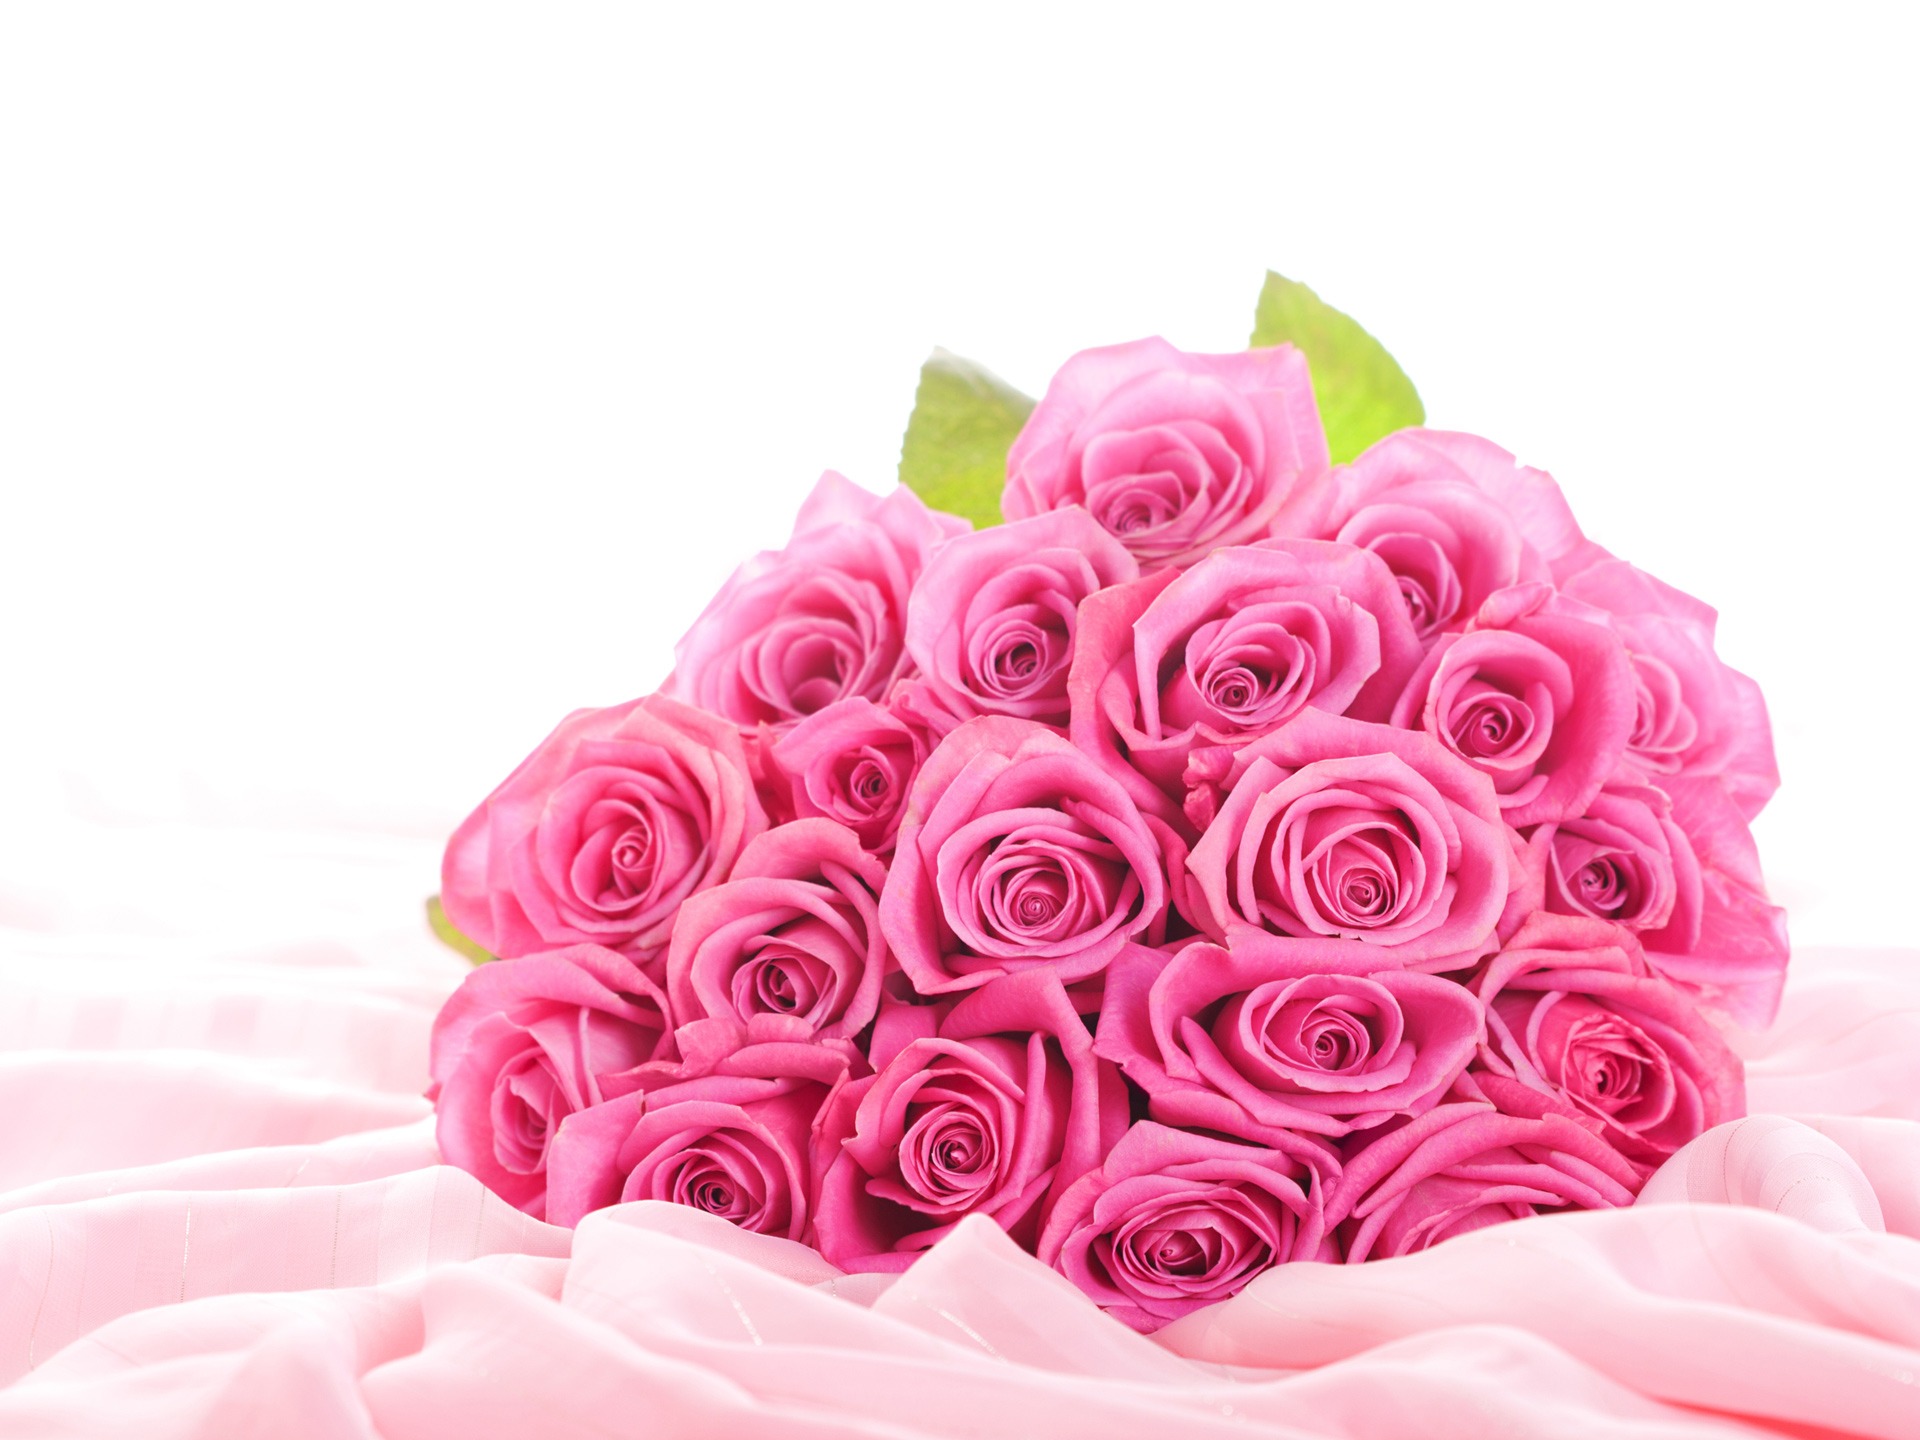 Pink Roses Desktop Backgrounds - Wallpaper, High Definition, High